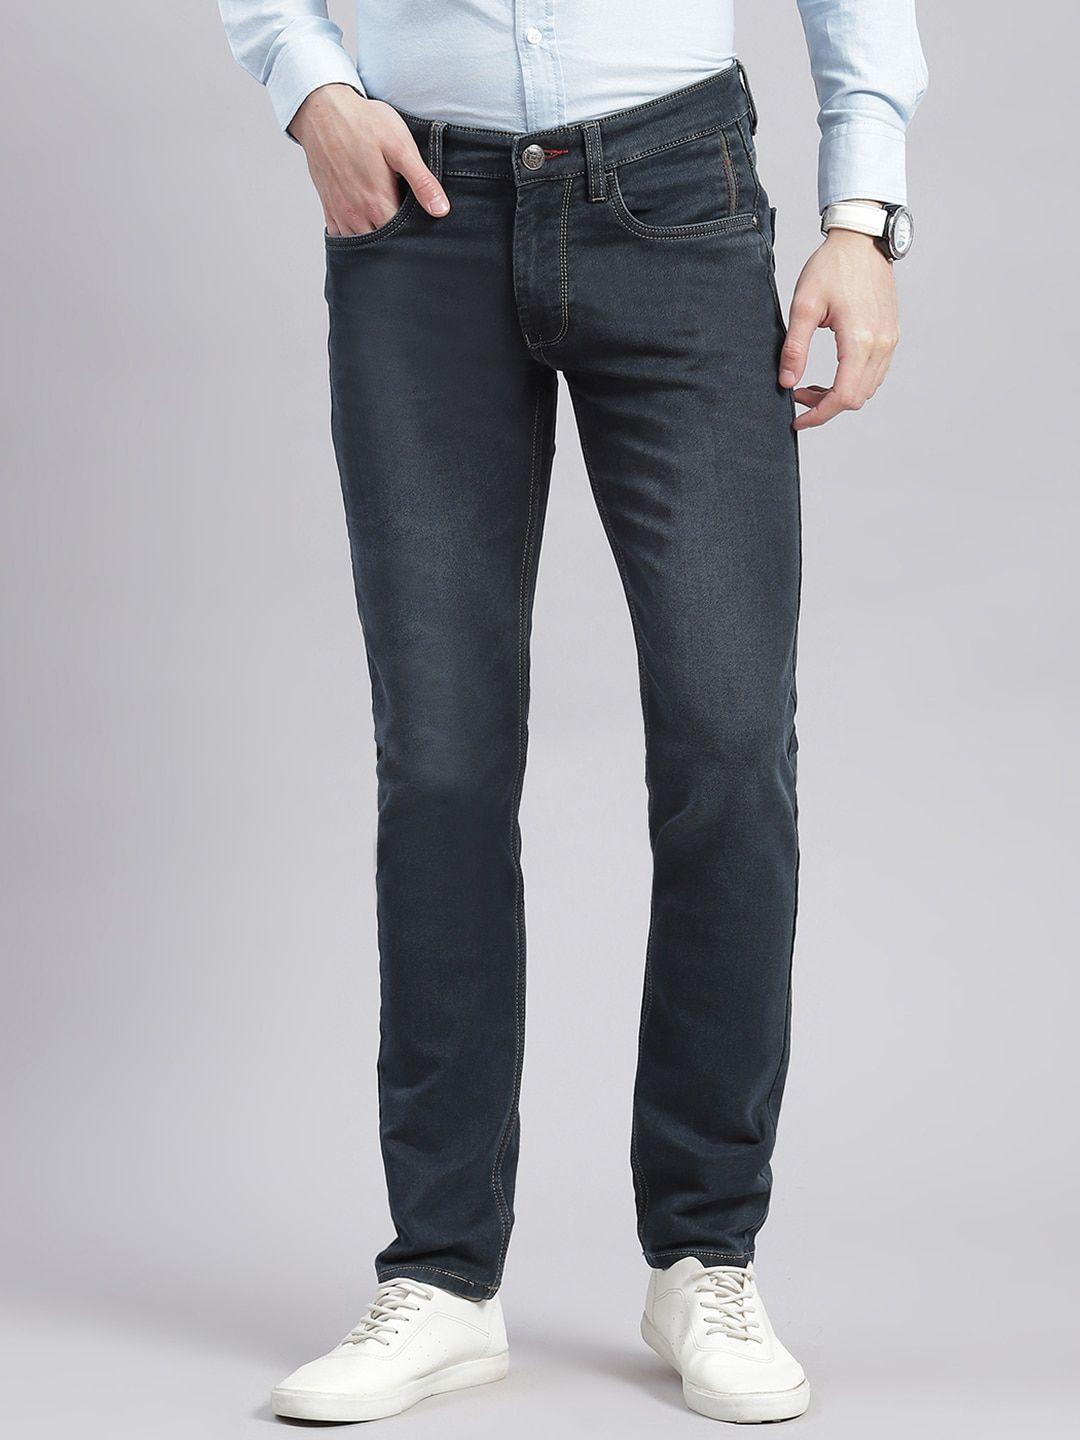 monte-carlo-men-mid-rise-clean-look-jeans